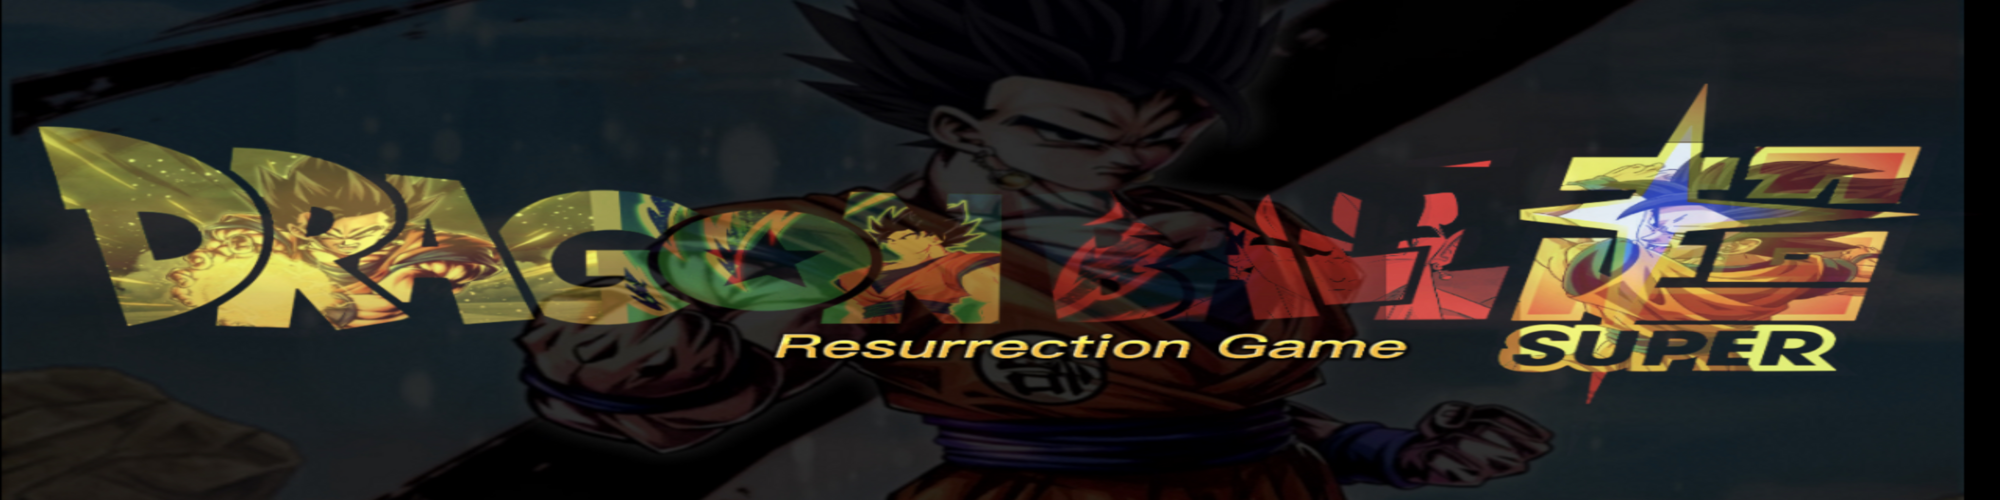 Dragon Ball Super: Resurrection Game